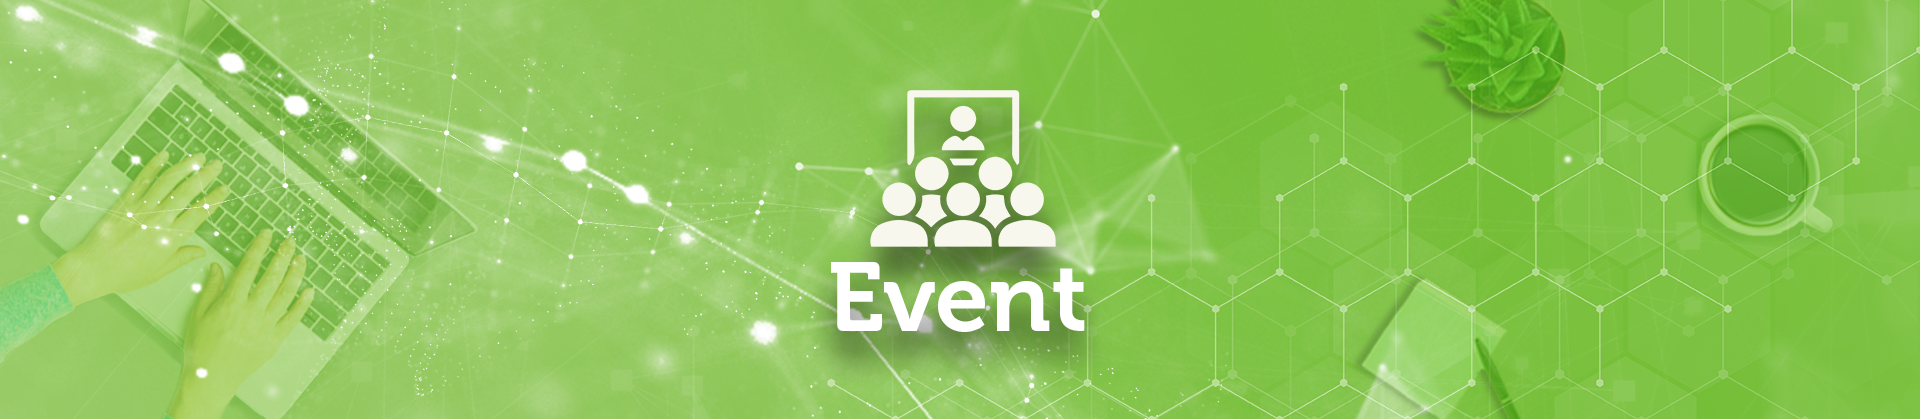 Event header image